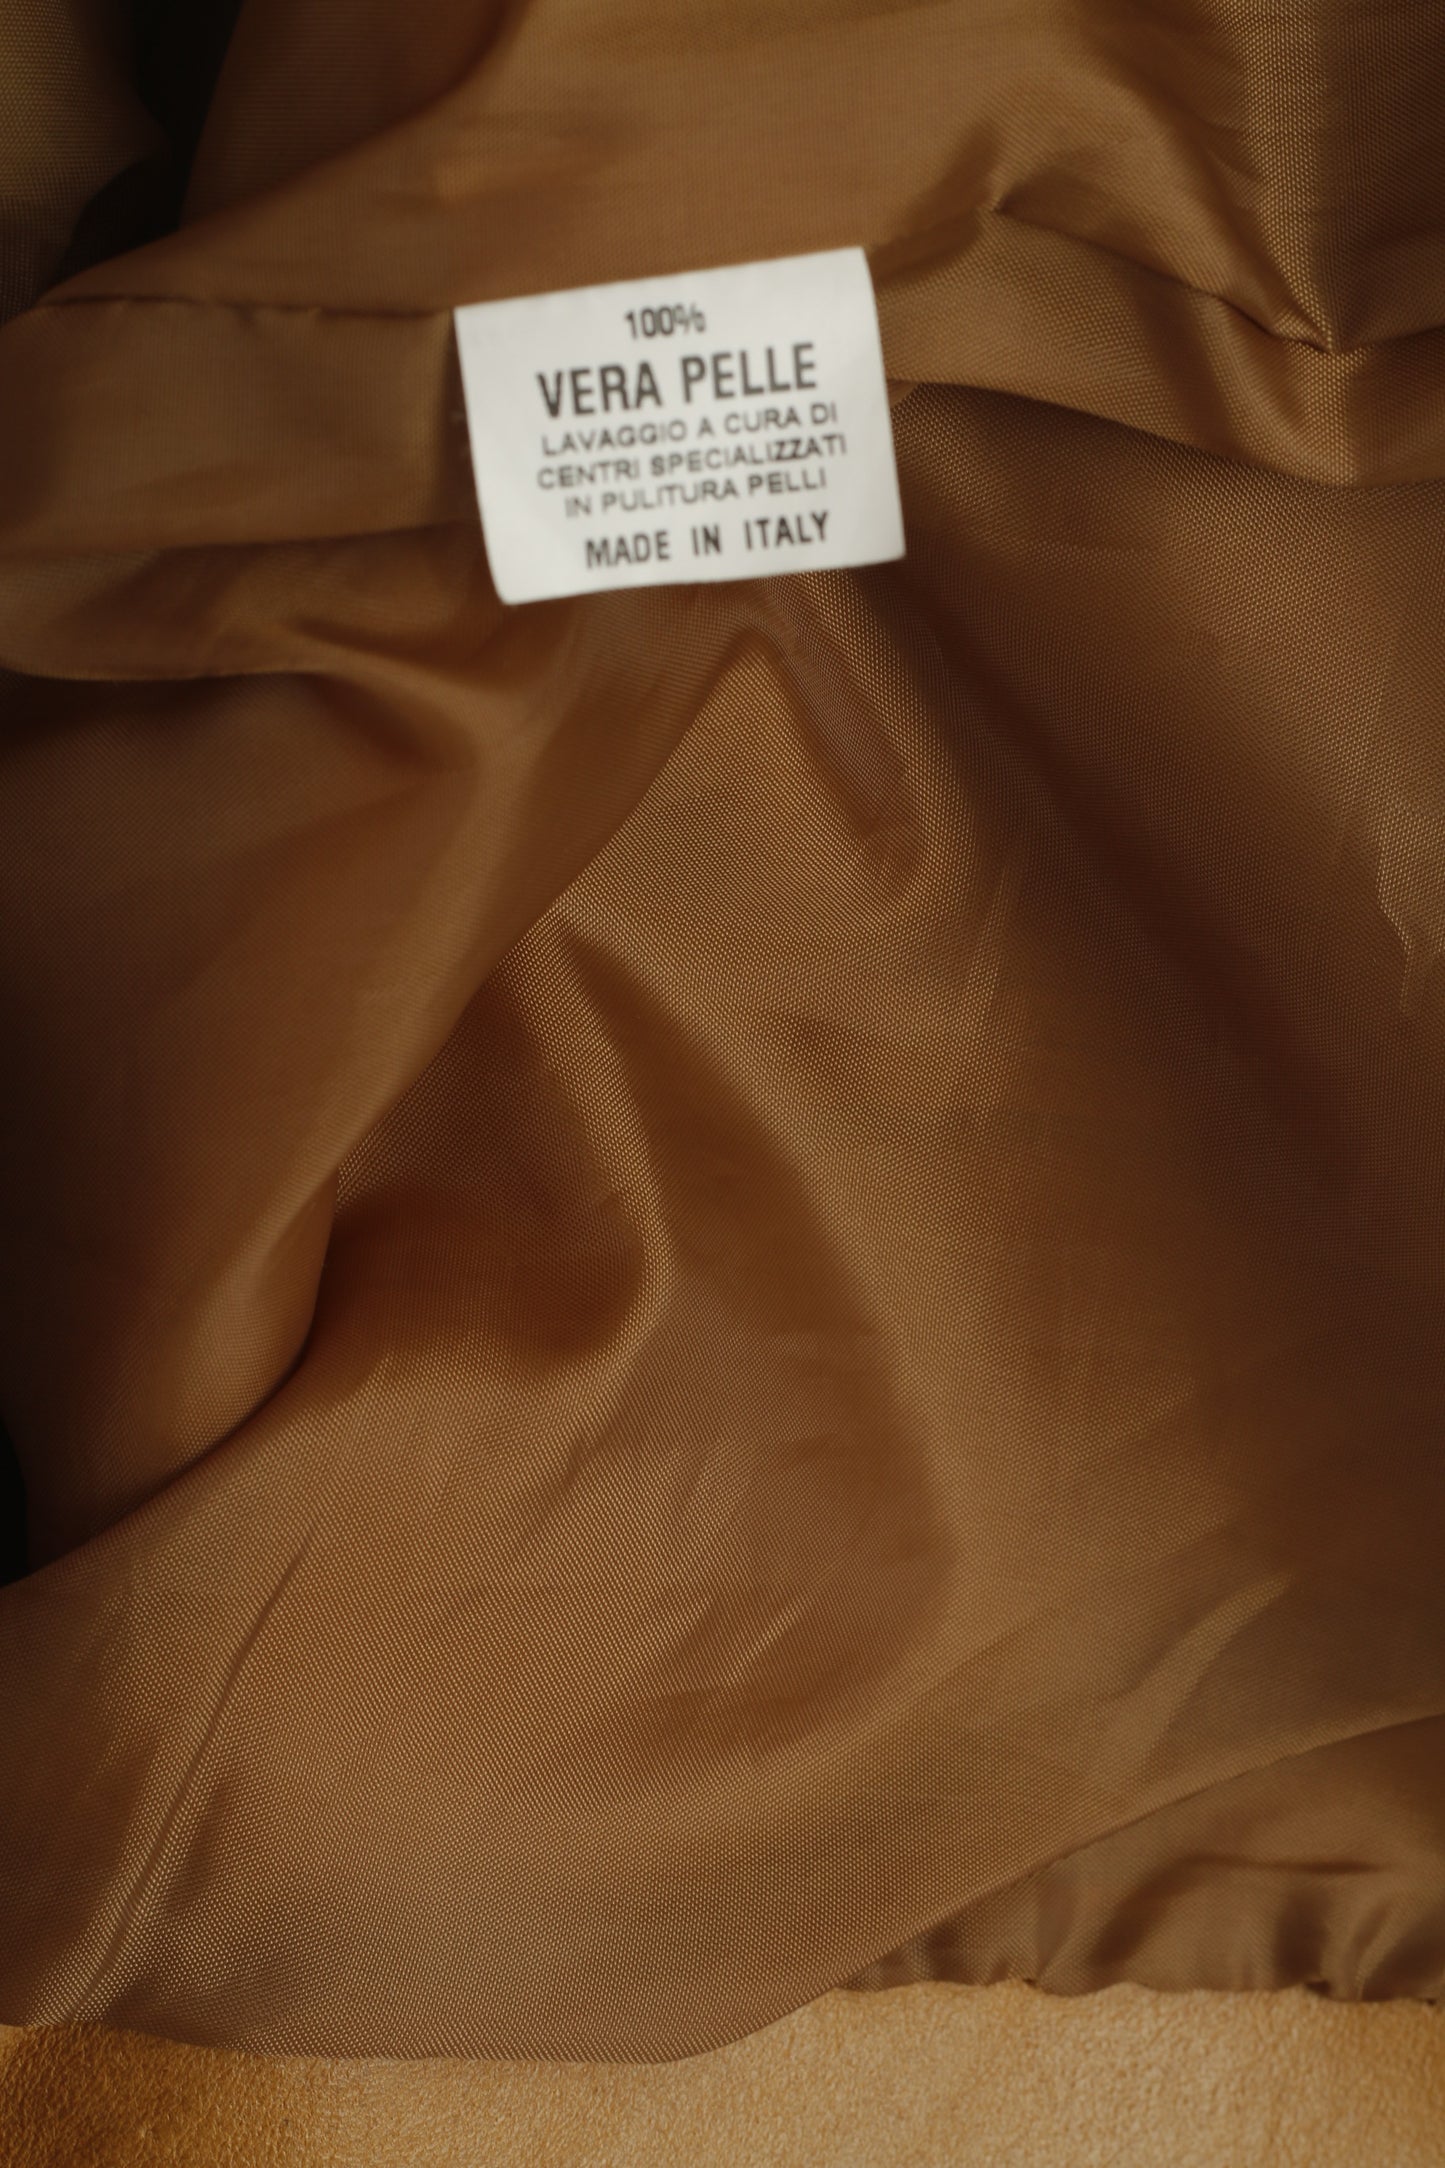 Lavorazione Artigiana Men L (M) Leather Jacket Camel Leather Made in Italy Classic Vintage Top